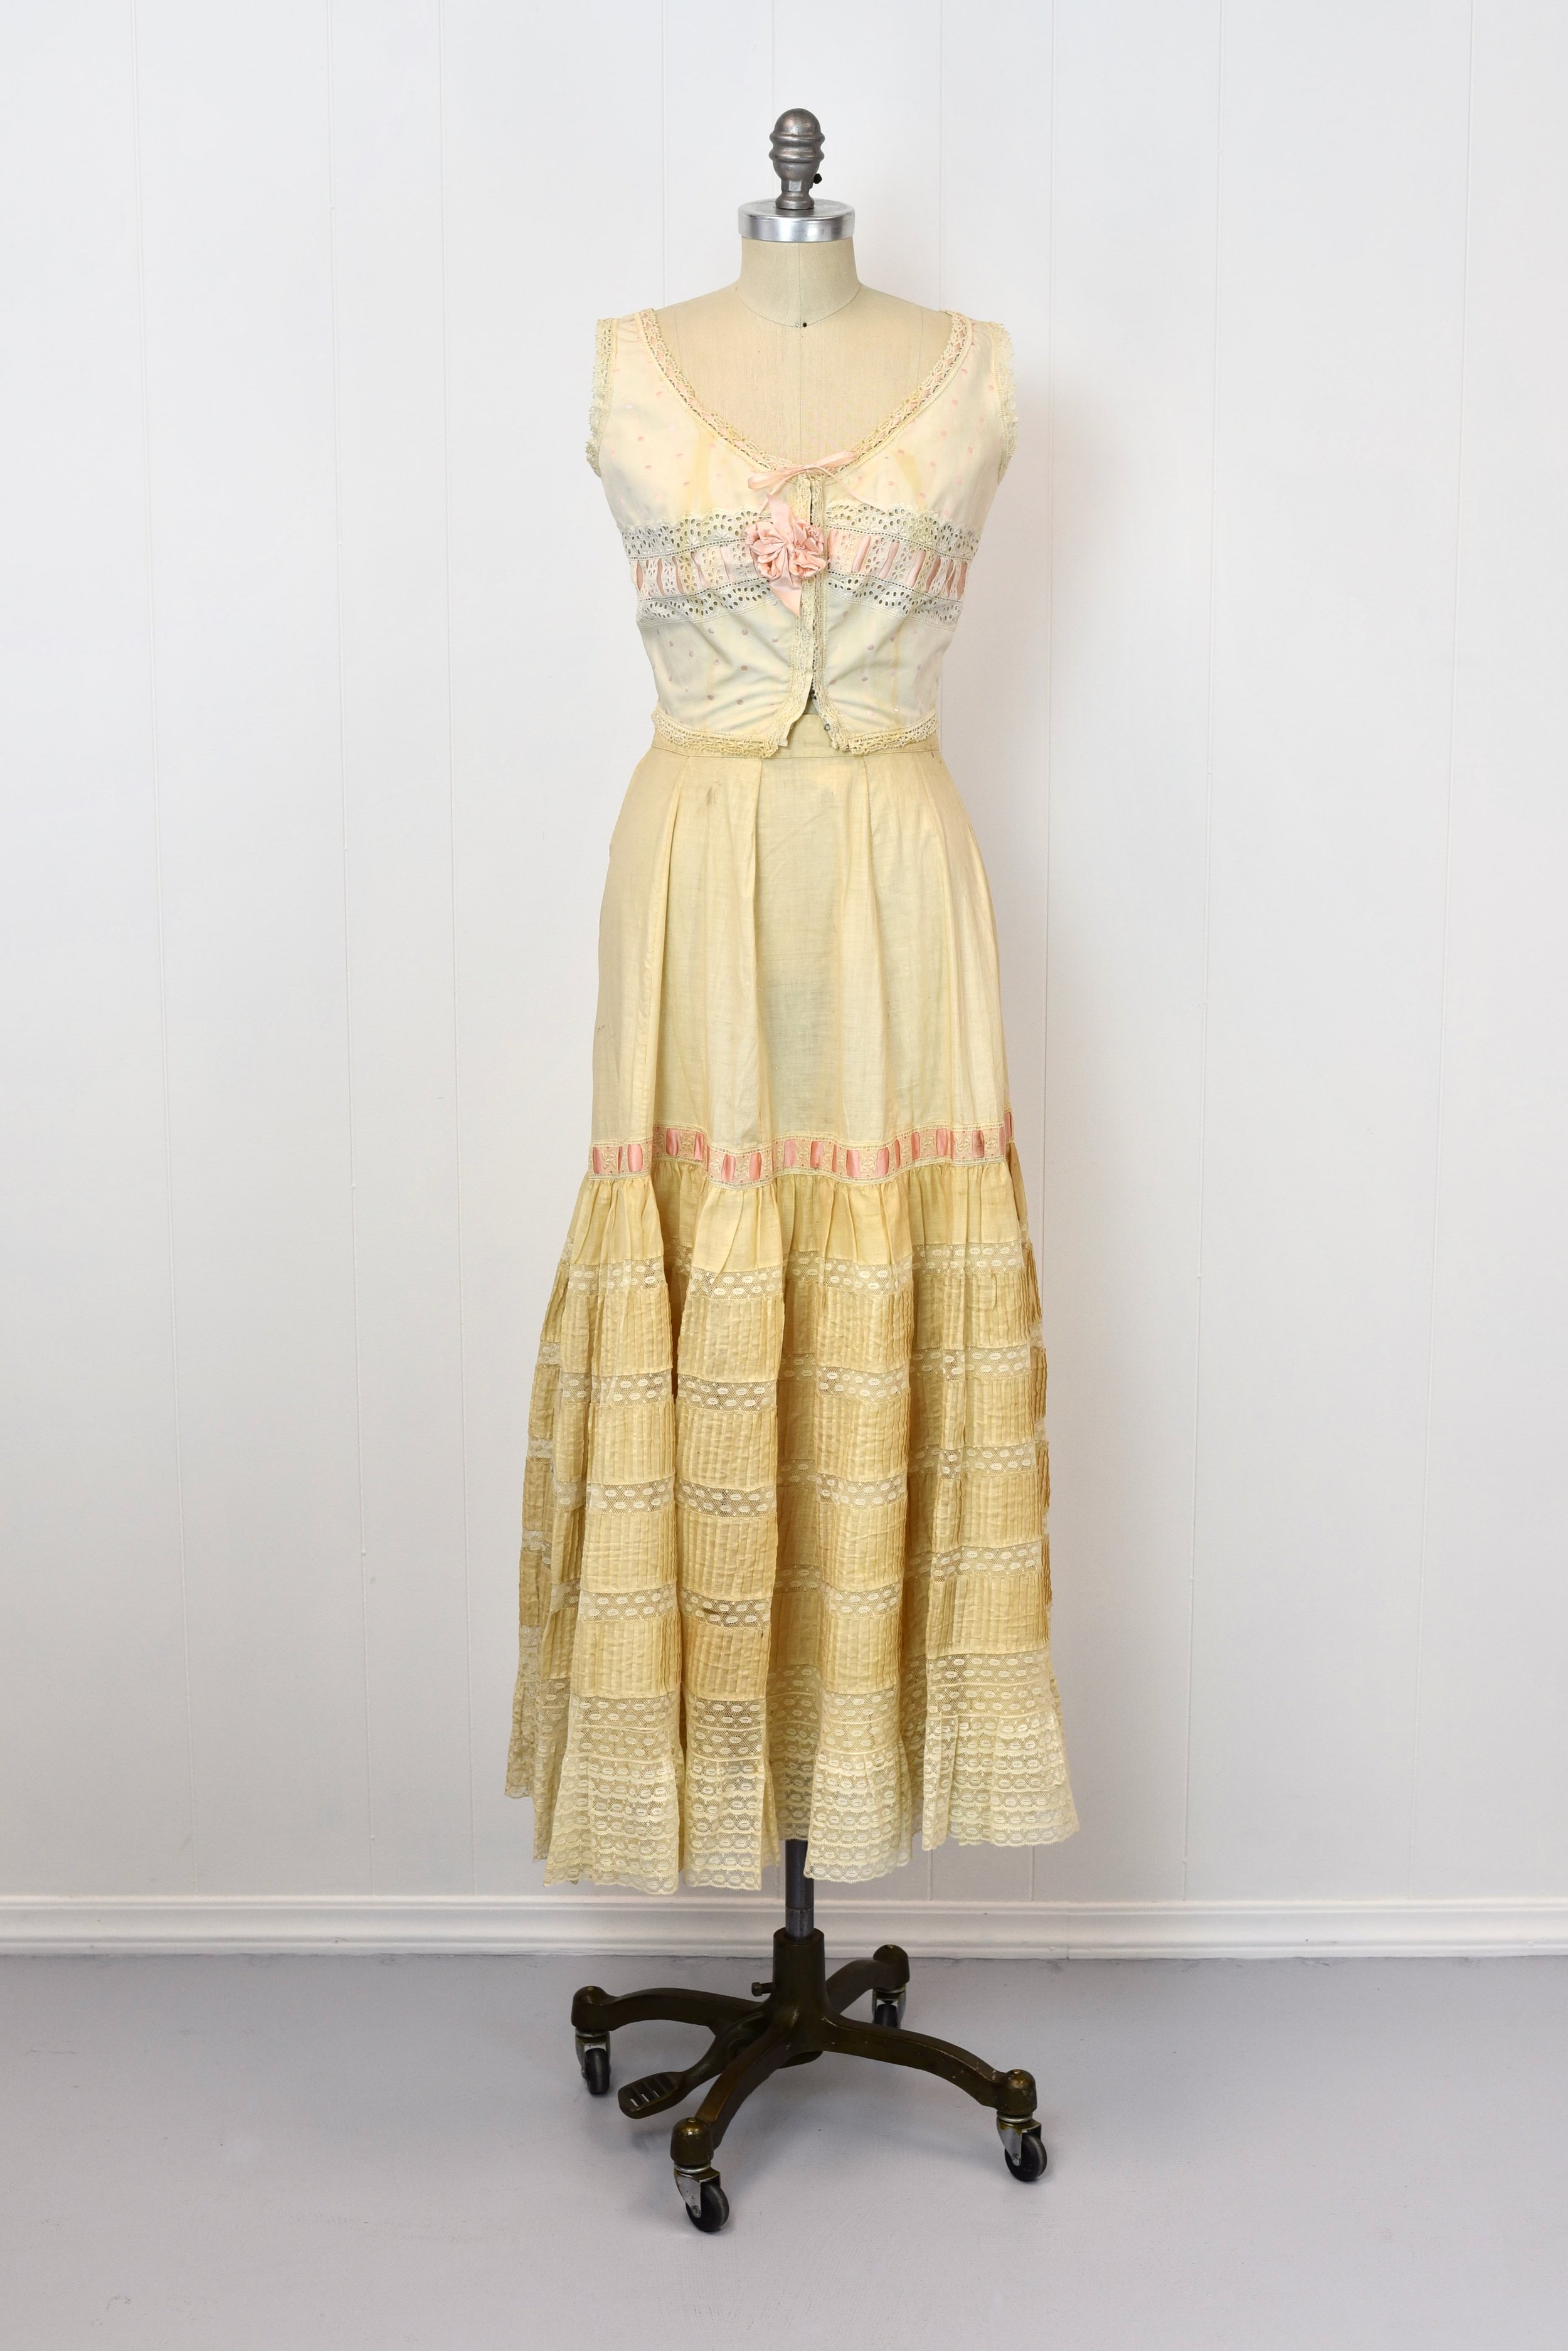 Antique 1800s/1900s Victorian Edwardian Corset Cover Blouse Pink Petticoat  Skirt Lingerie Undergarments Two Piece Set — Canned Ham Vintage